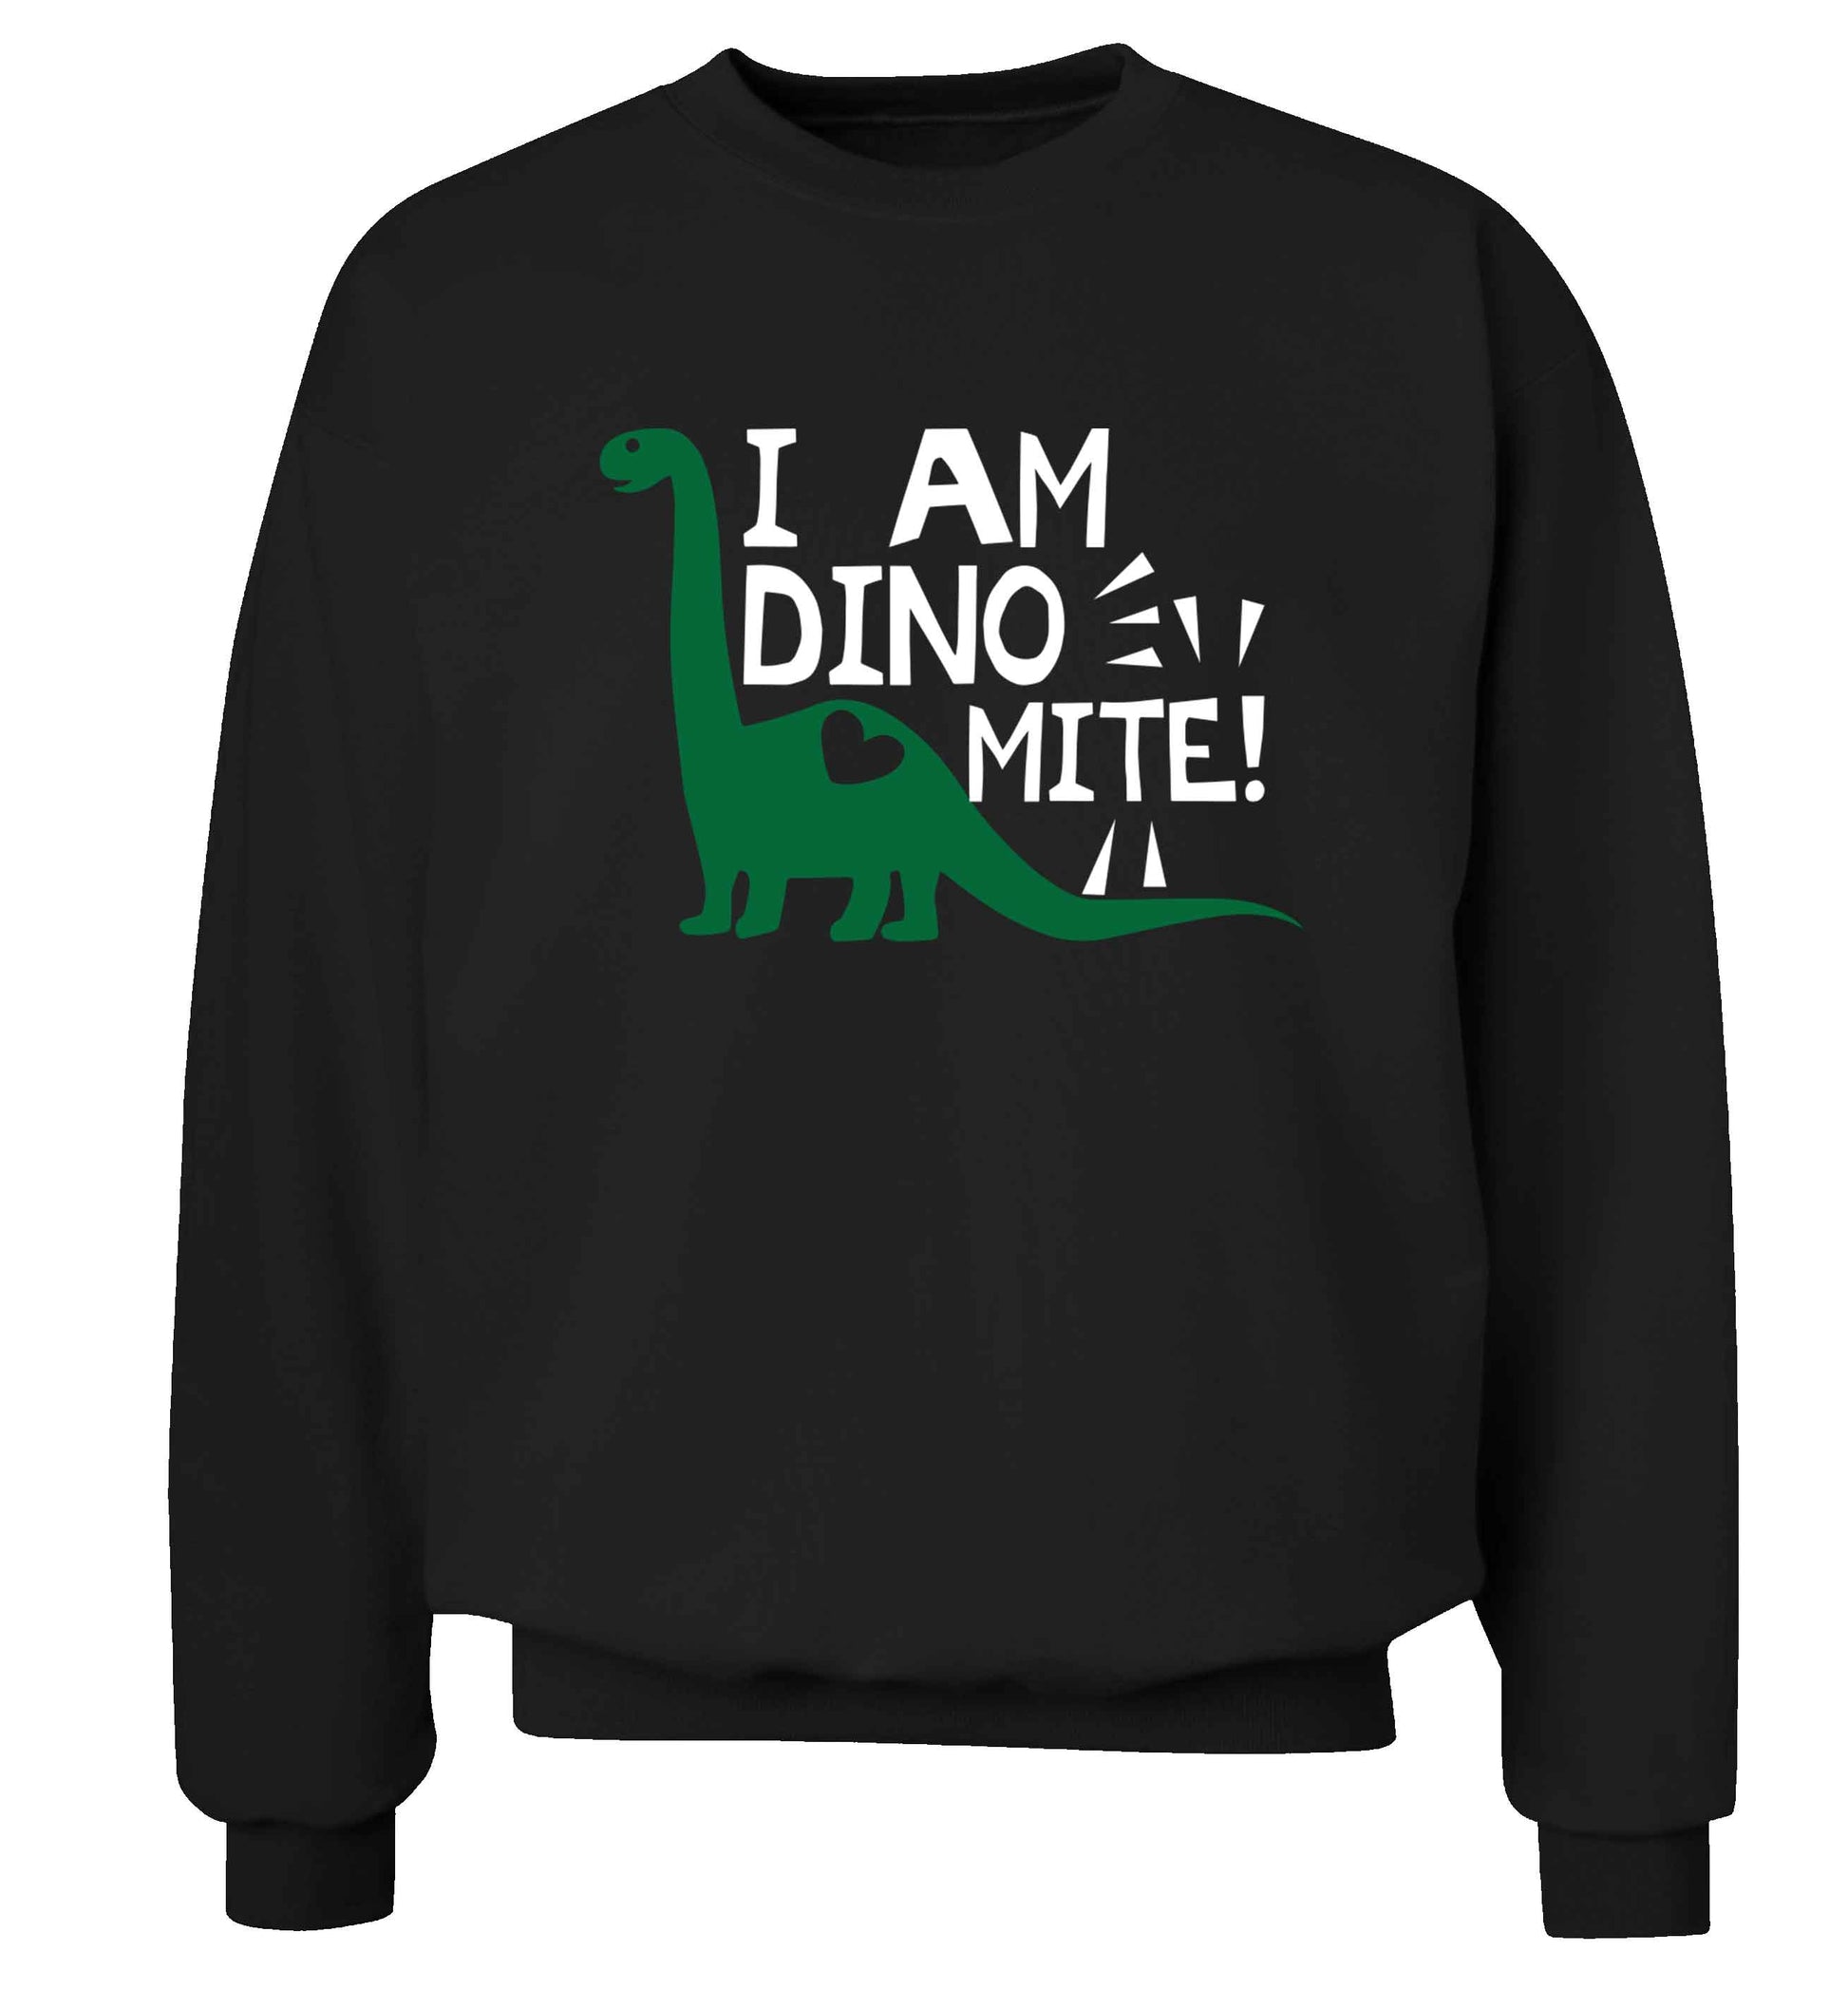 I am dinomite! Adult's unisex black Sweater 2XL